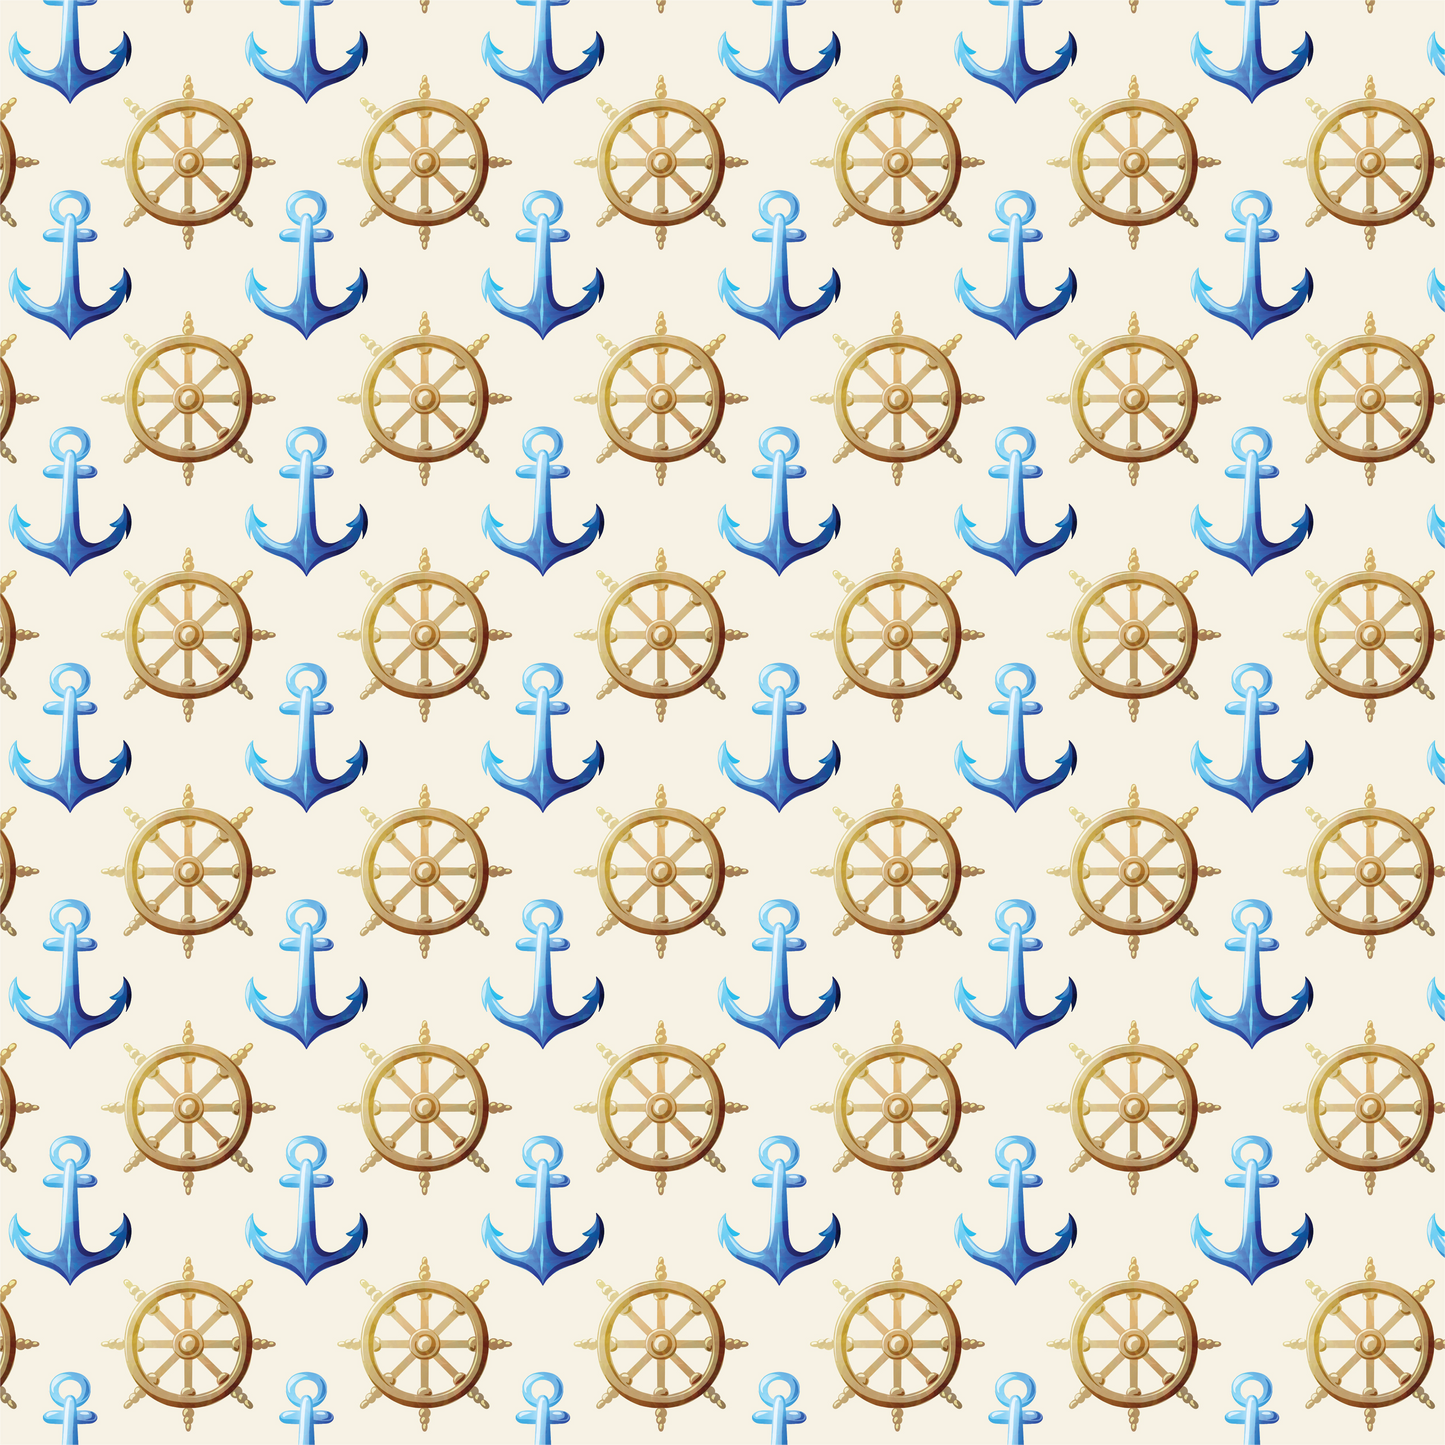 Nautical Fun - Anchors and Wheels 008